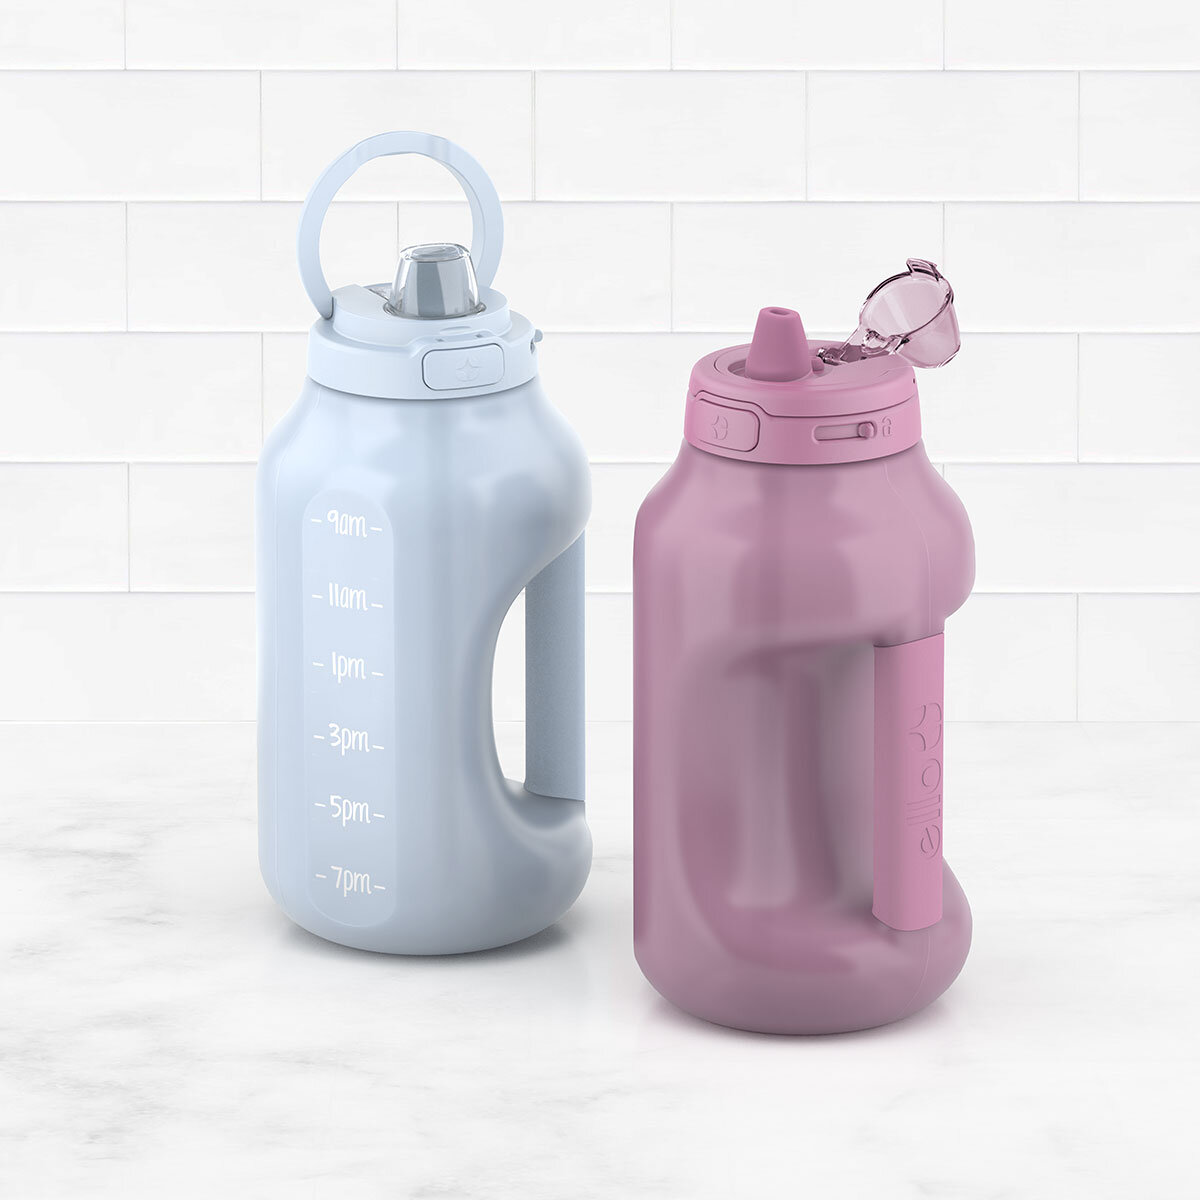 Ello 1.8L Water Bottle, 2 Pack in 2 Colours